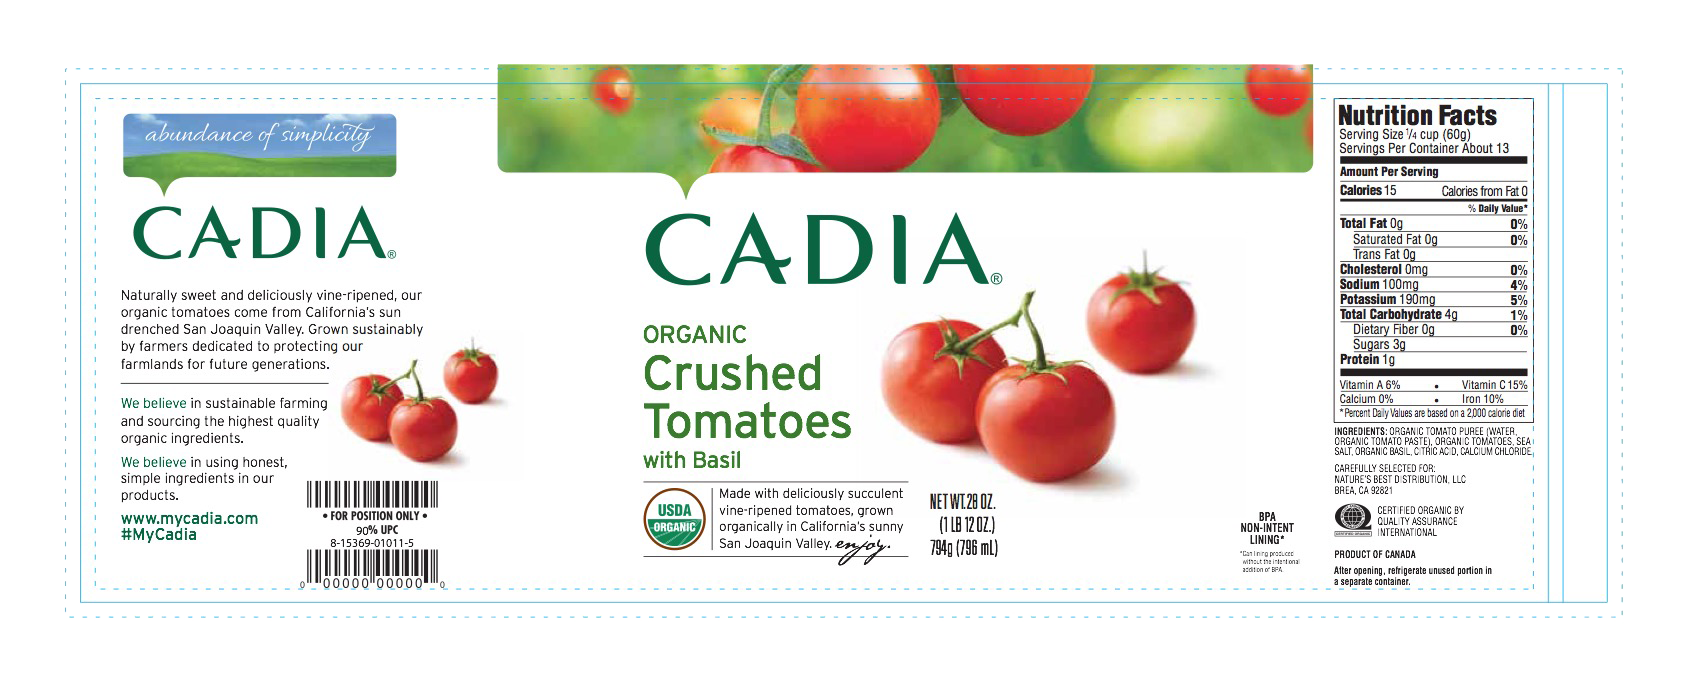 https://images.squarespace-cdn.com/content/v1/5cb4b4b77eb88c7576115030/1555525792443-14QKZZB8W9CAEABVE0WQ/Cadia_Crushed+Tomatoes+with+Basil_r2.png